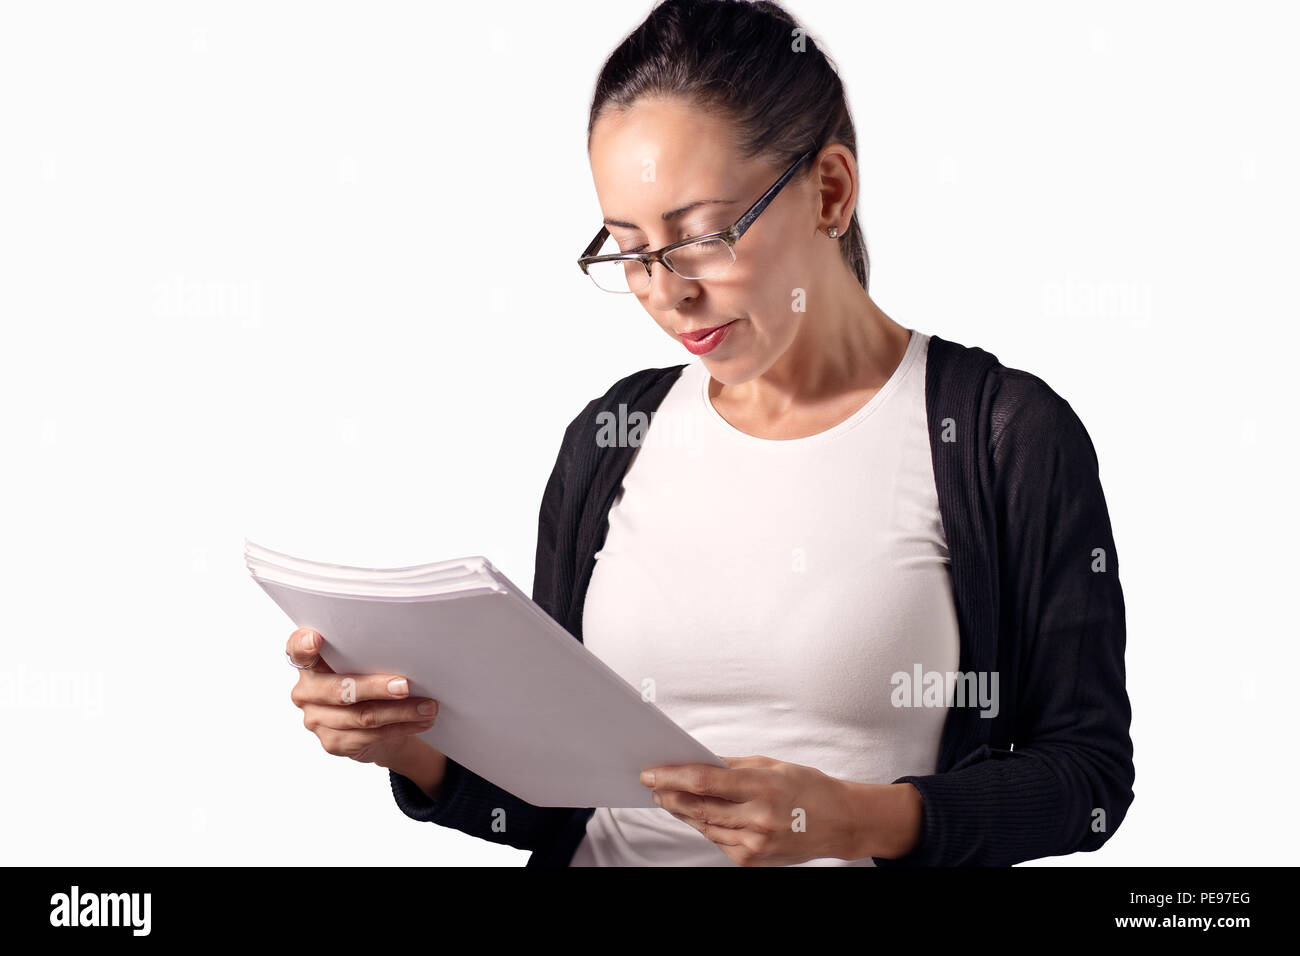 Mujer de negocios revisando documentación / Businesswoman reviewing documents Stock Photo